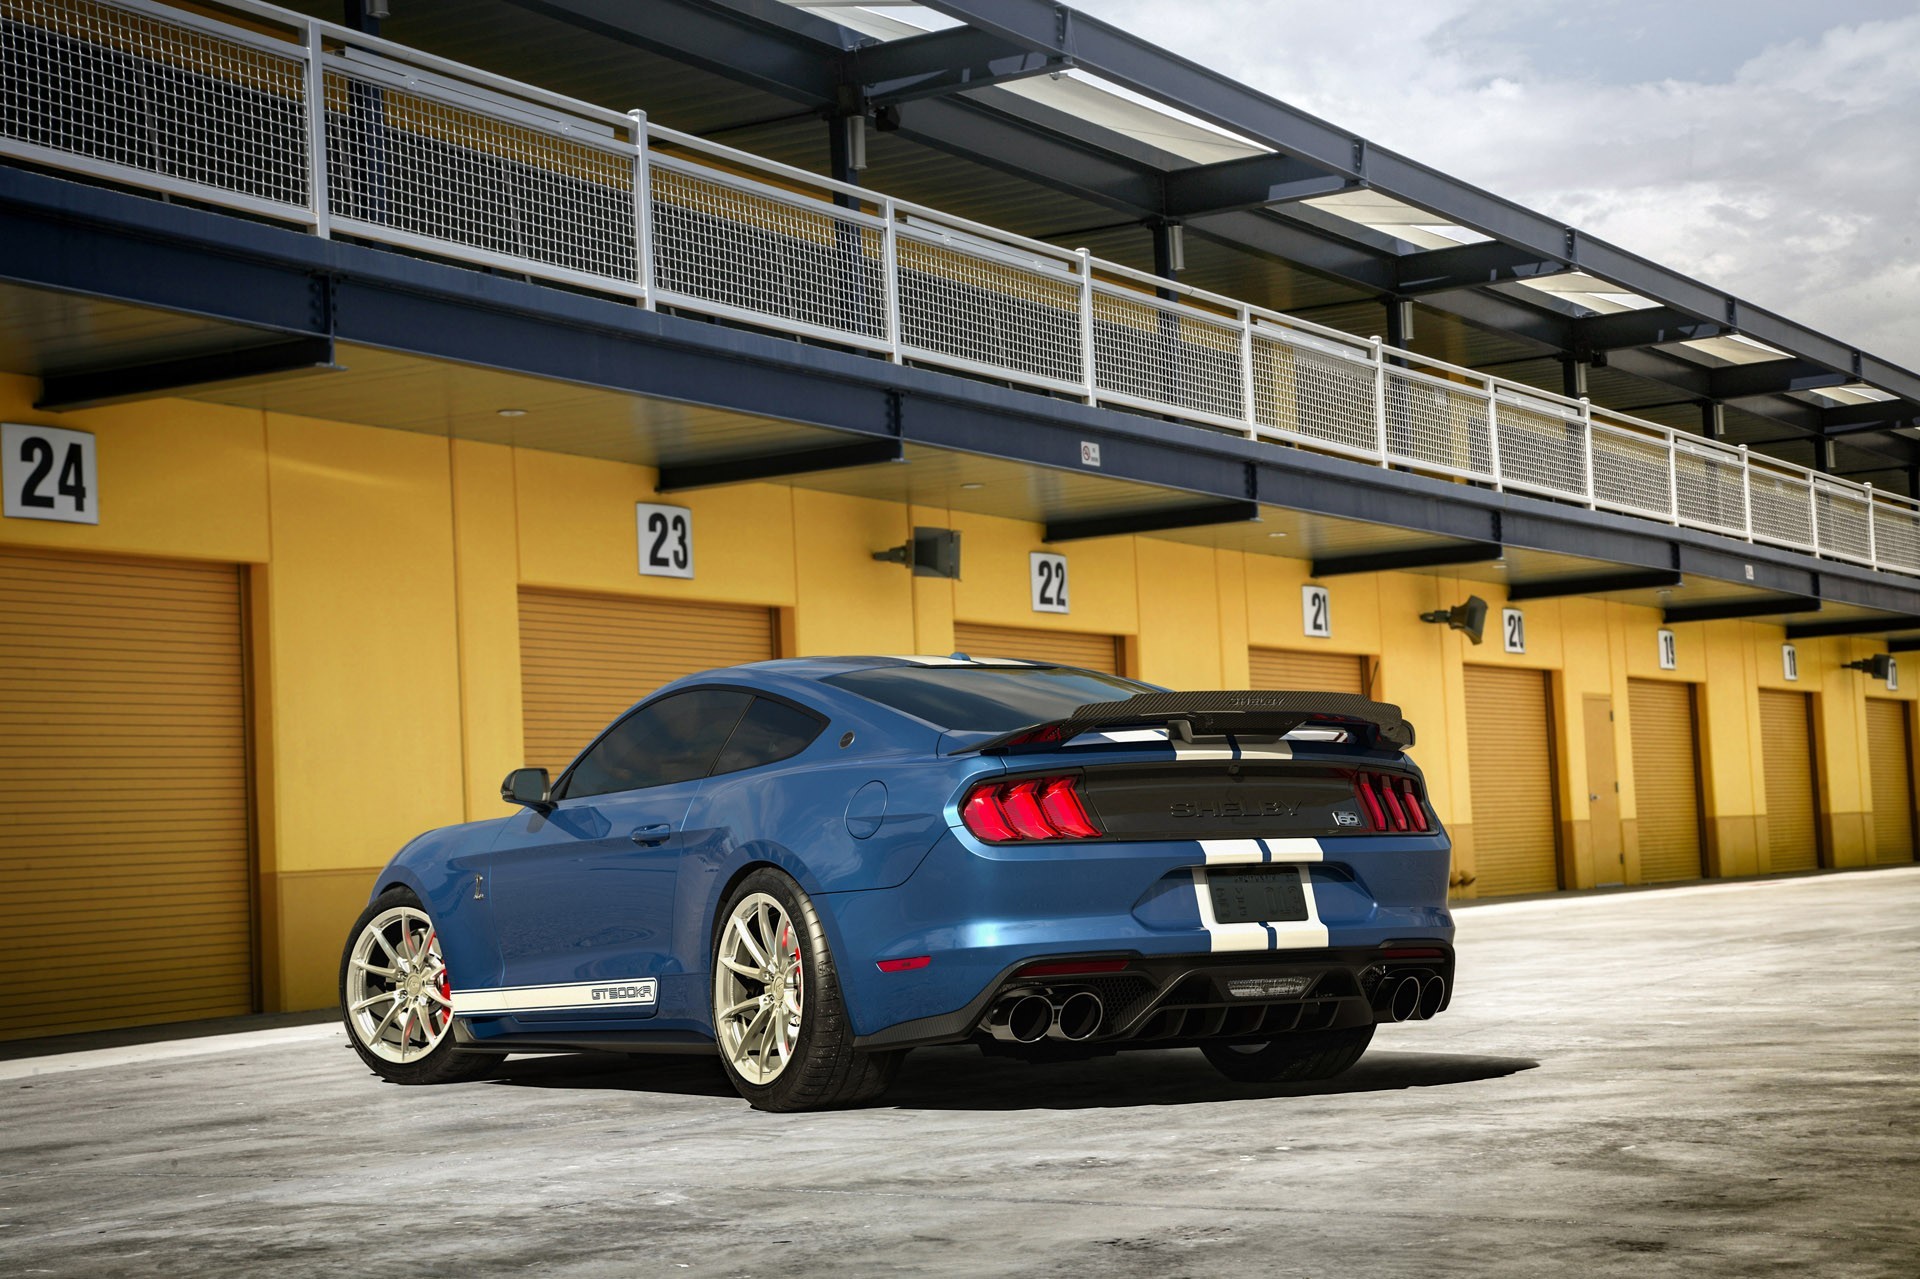 Shelby выпускает экстремальный 900-сильный Ford Mustang GT500KR